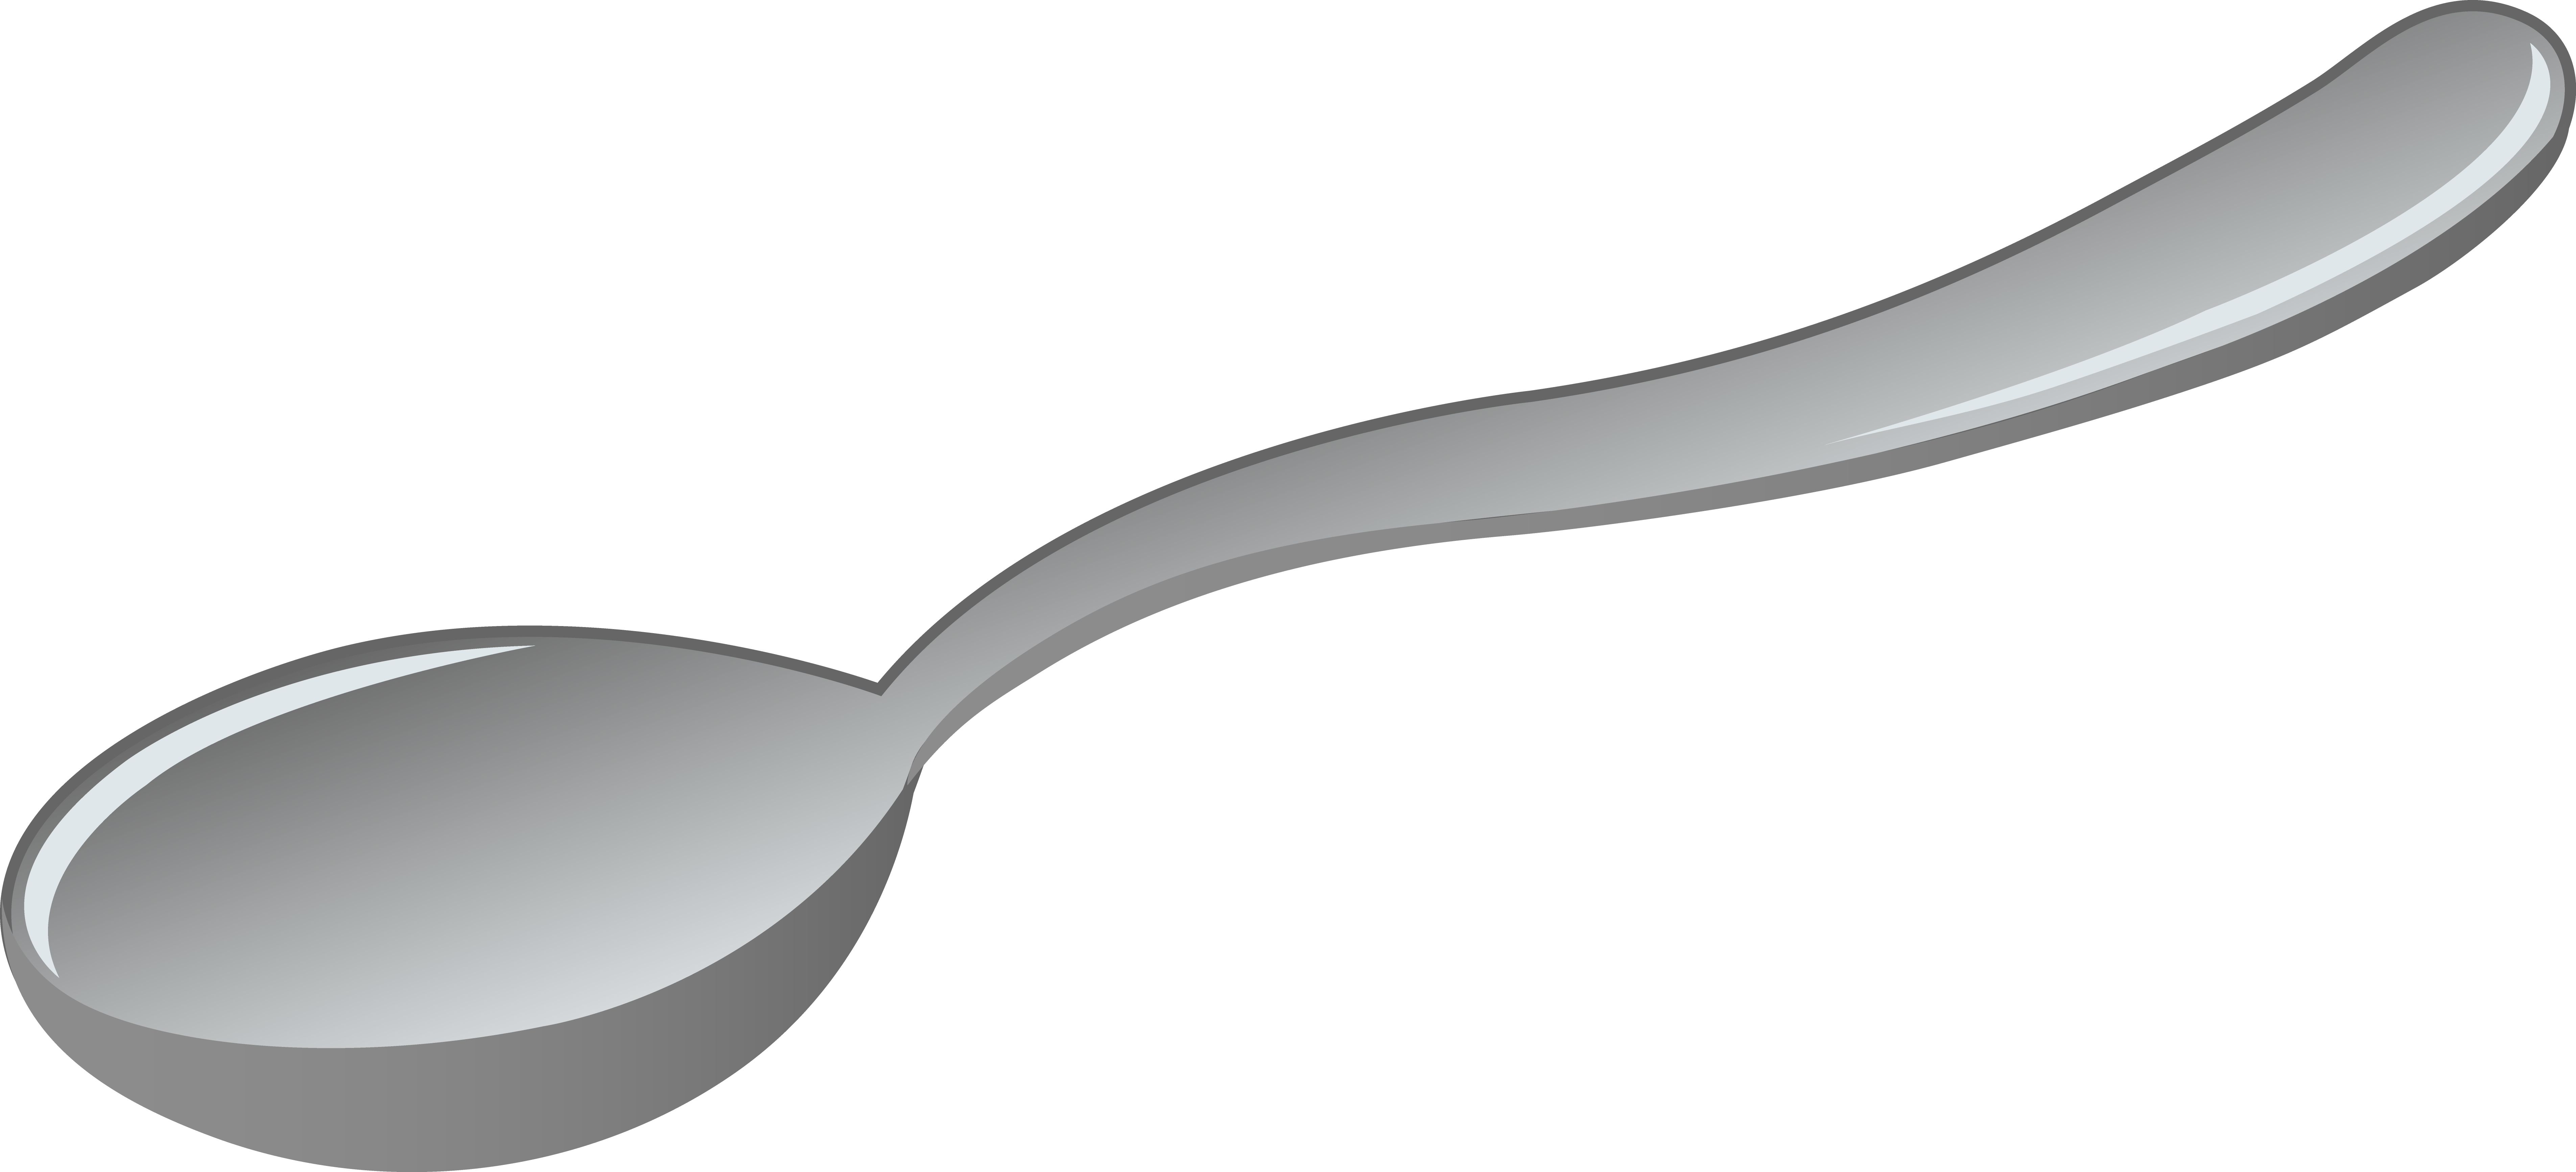 Plastic spoon clipart.